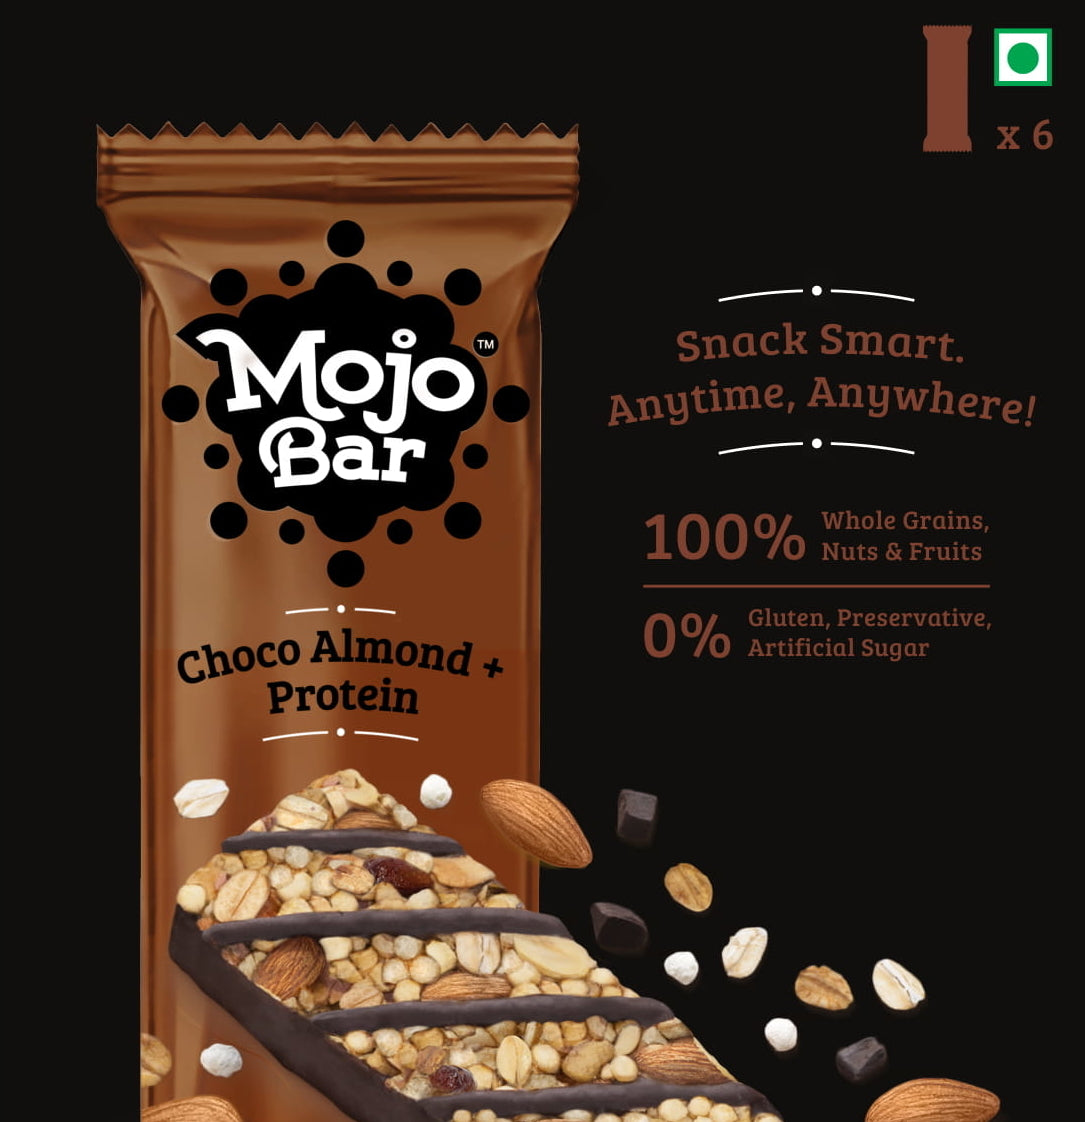 Choco Almond + Protein, 192g (Pack Of 6) - Mojo Snacks